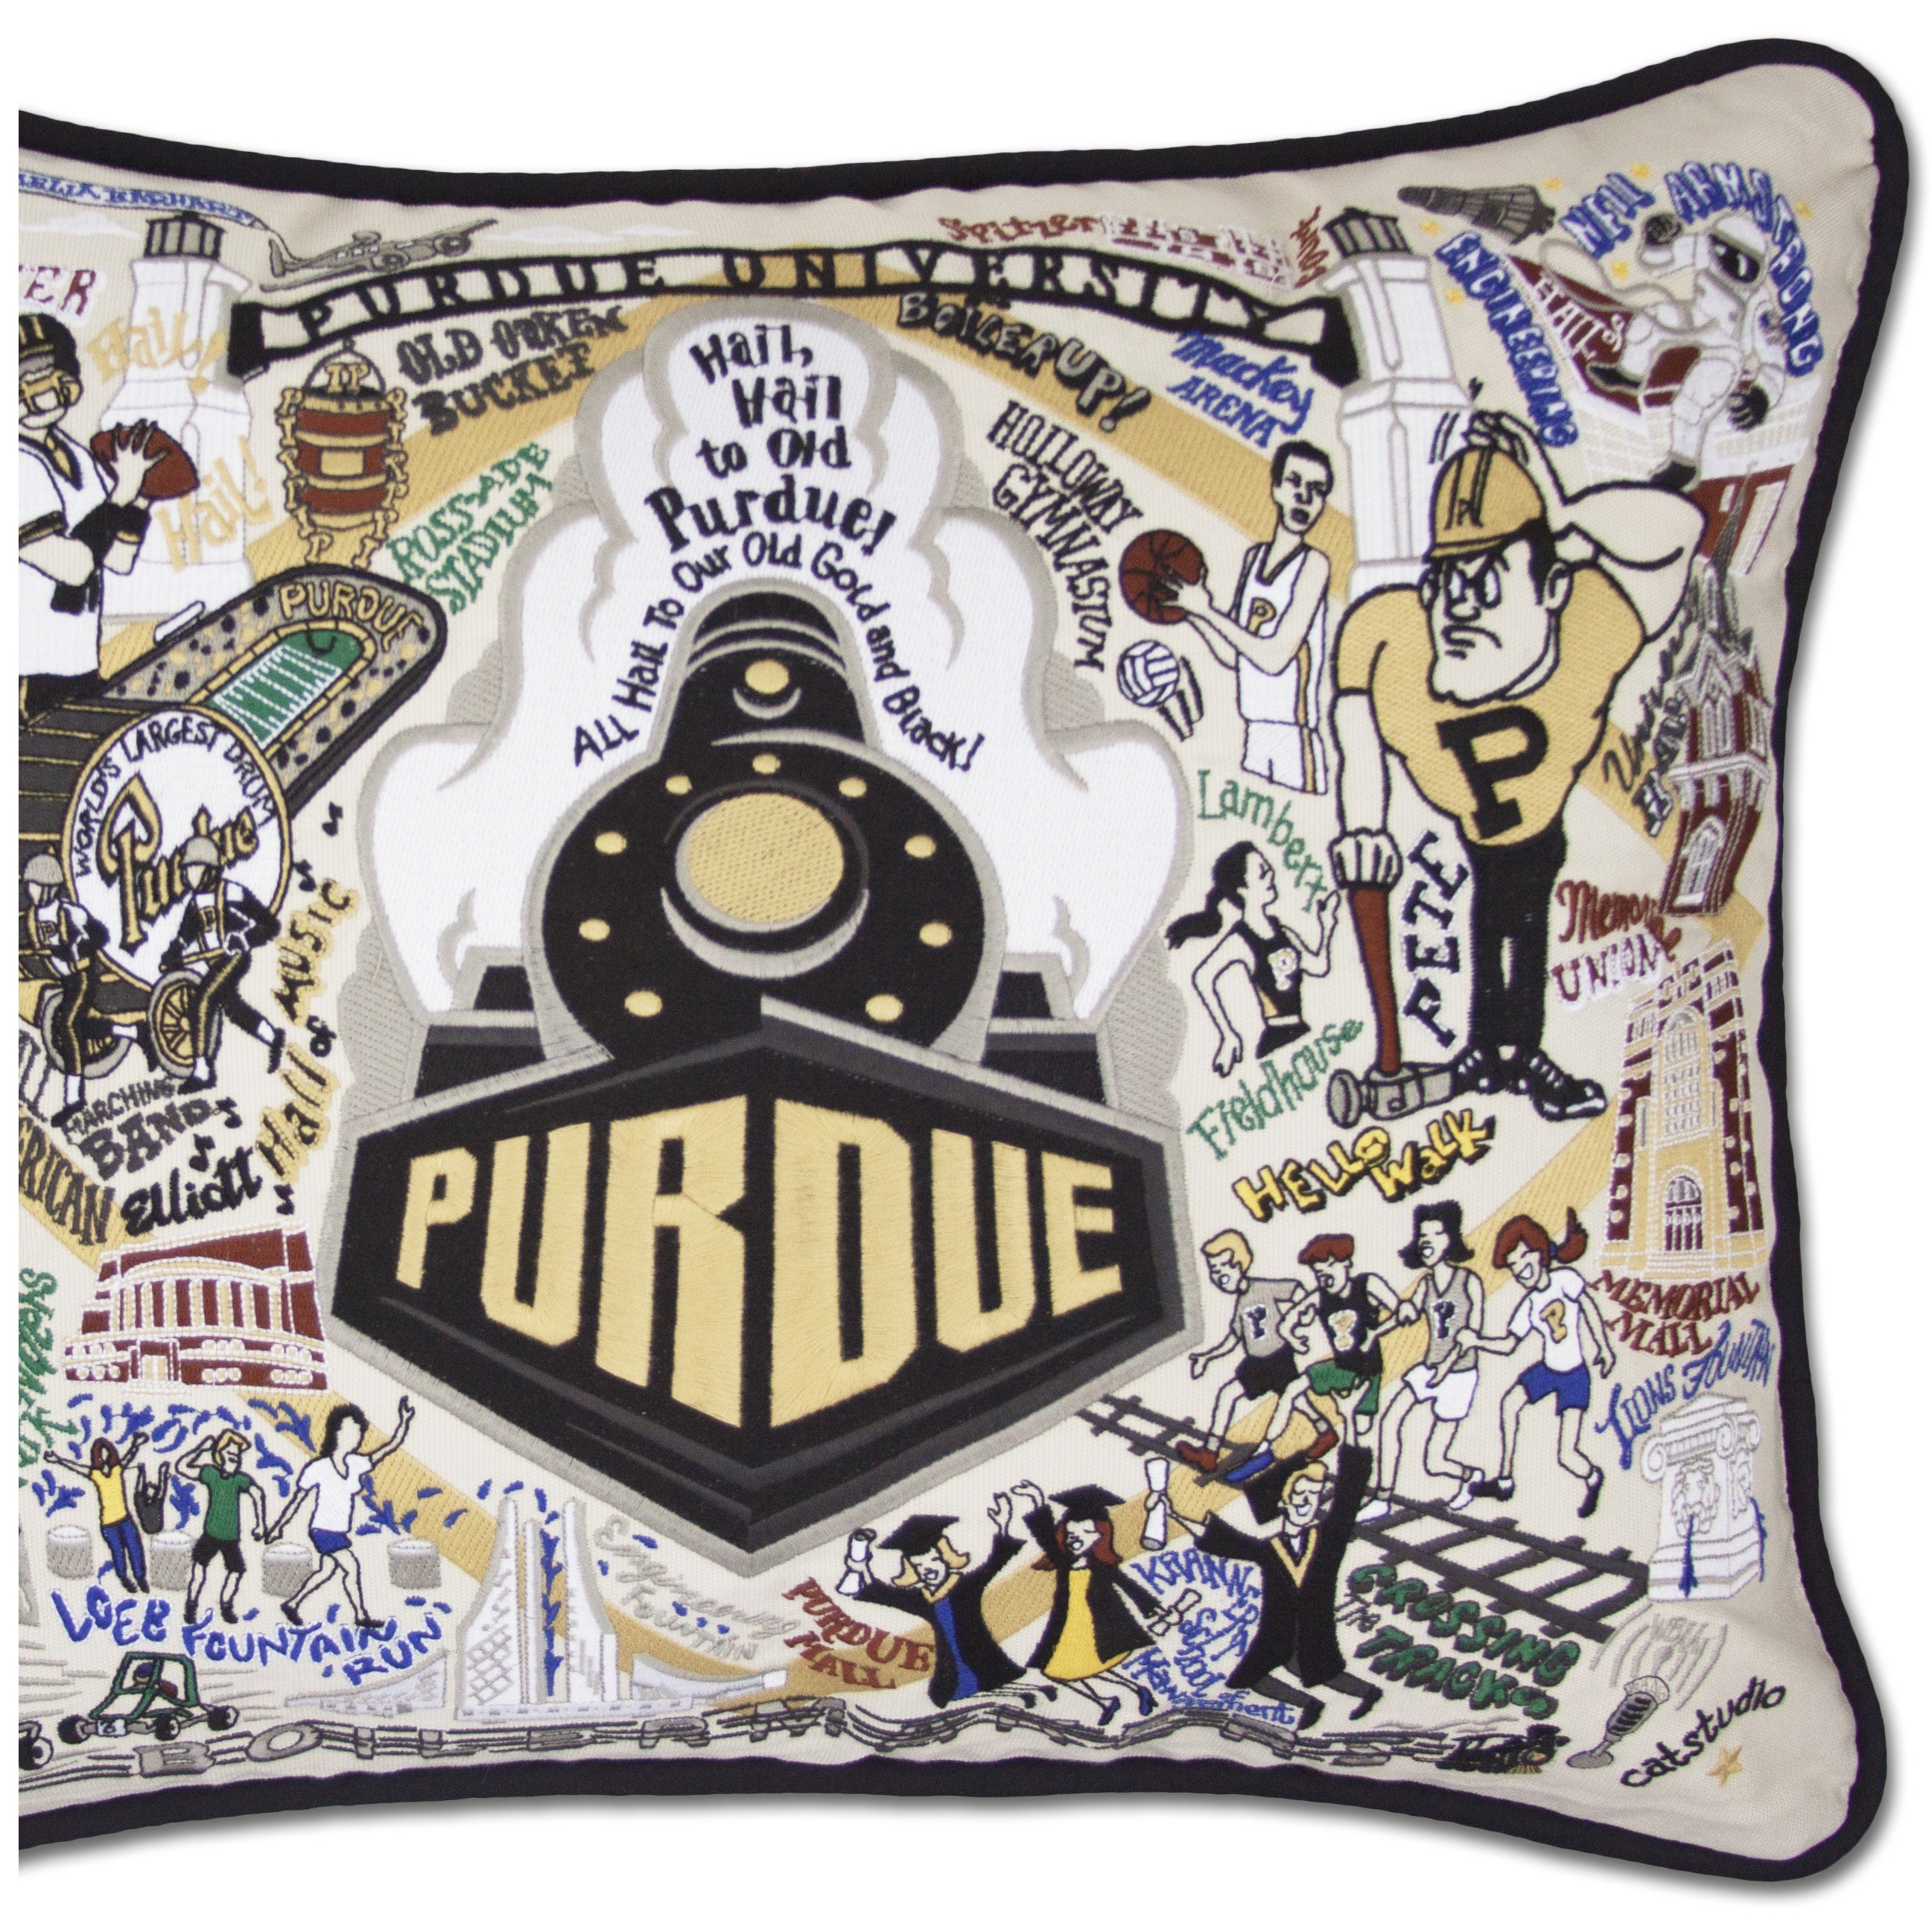 Purdue University Collegiate Embroidered Pillow